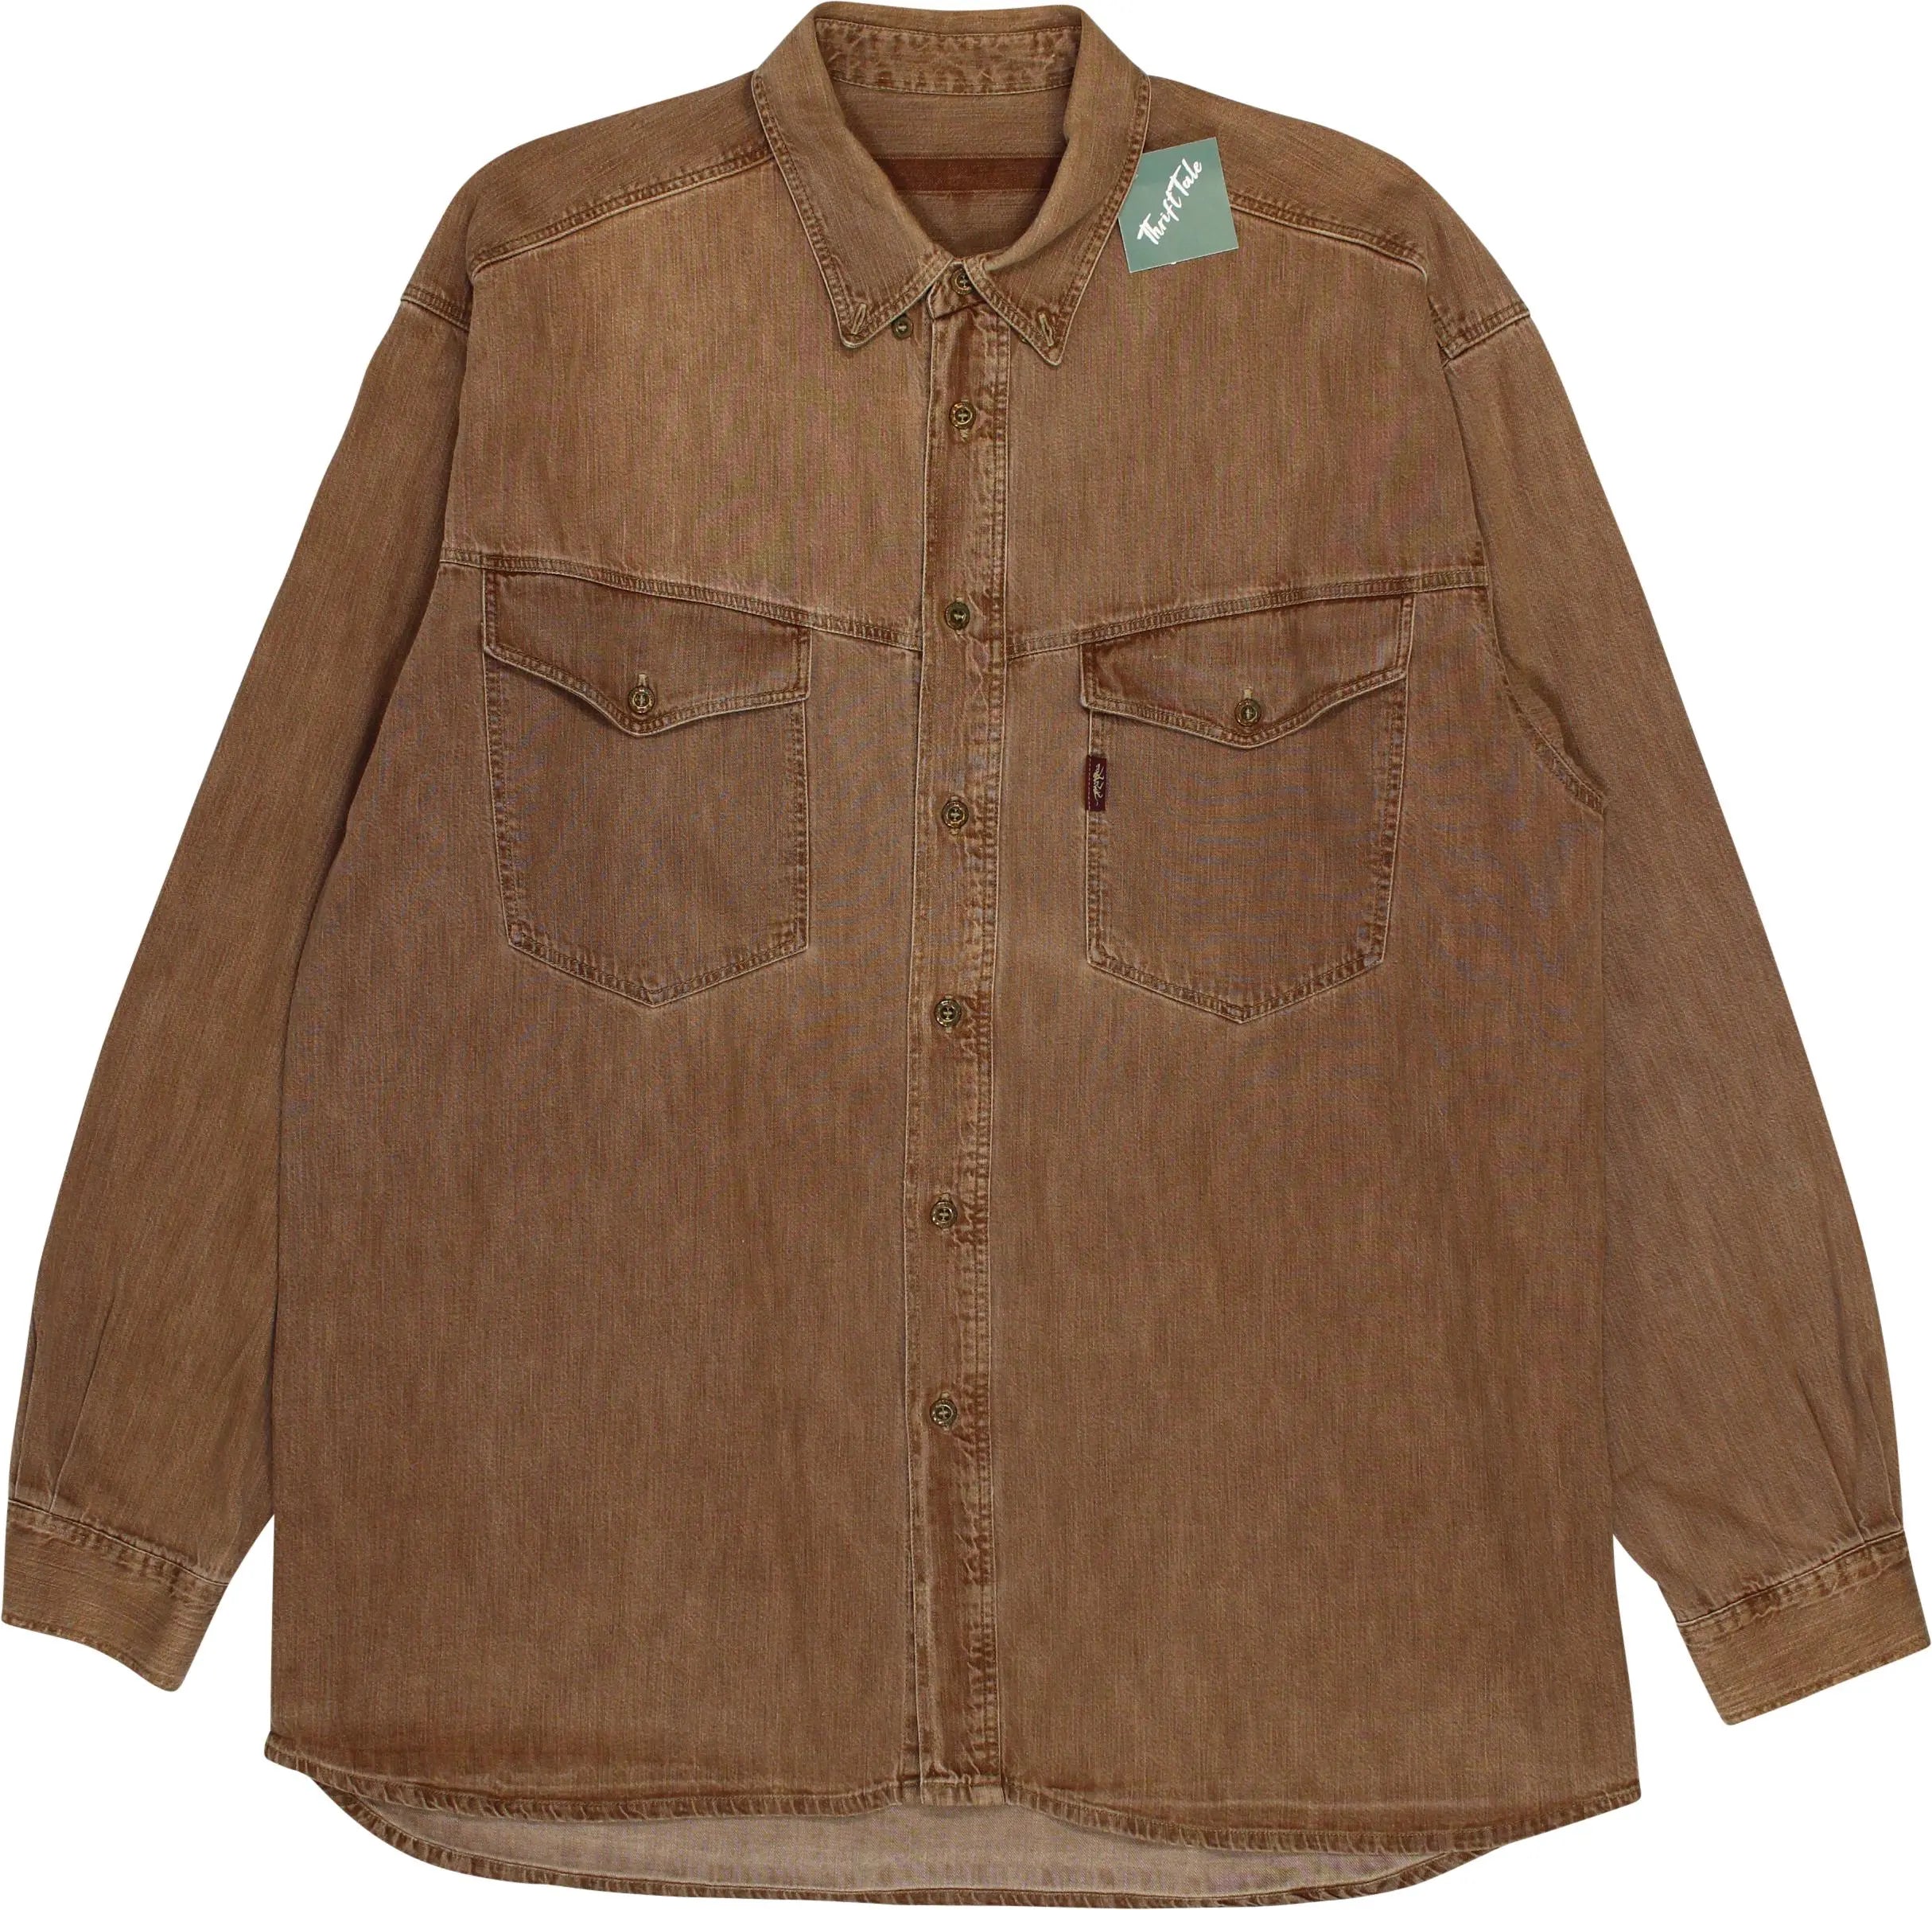 Love - Denim Shirt- ThriftTale.com - Vintage and second handclothing